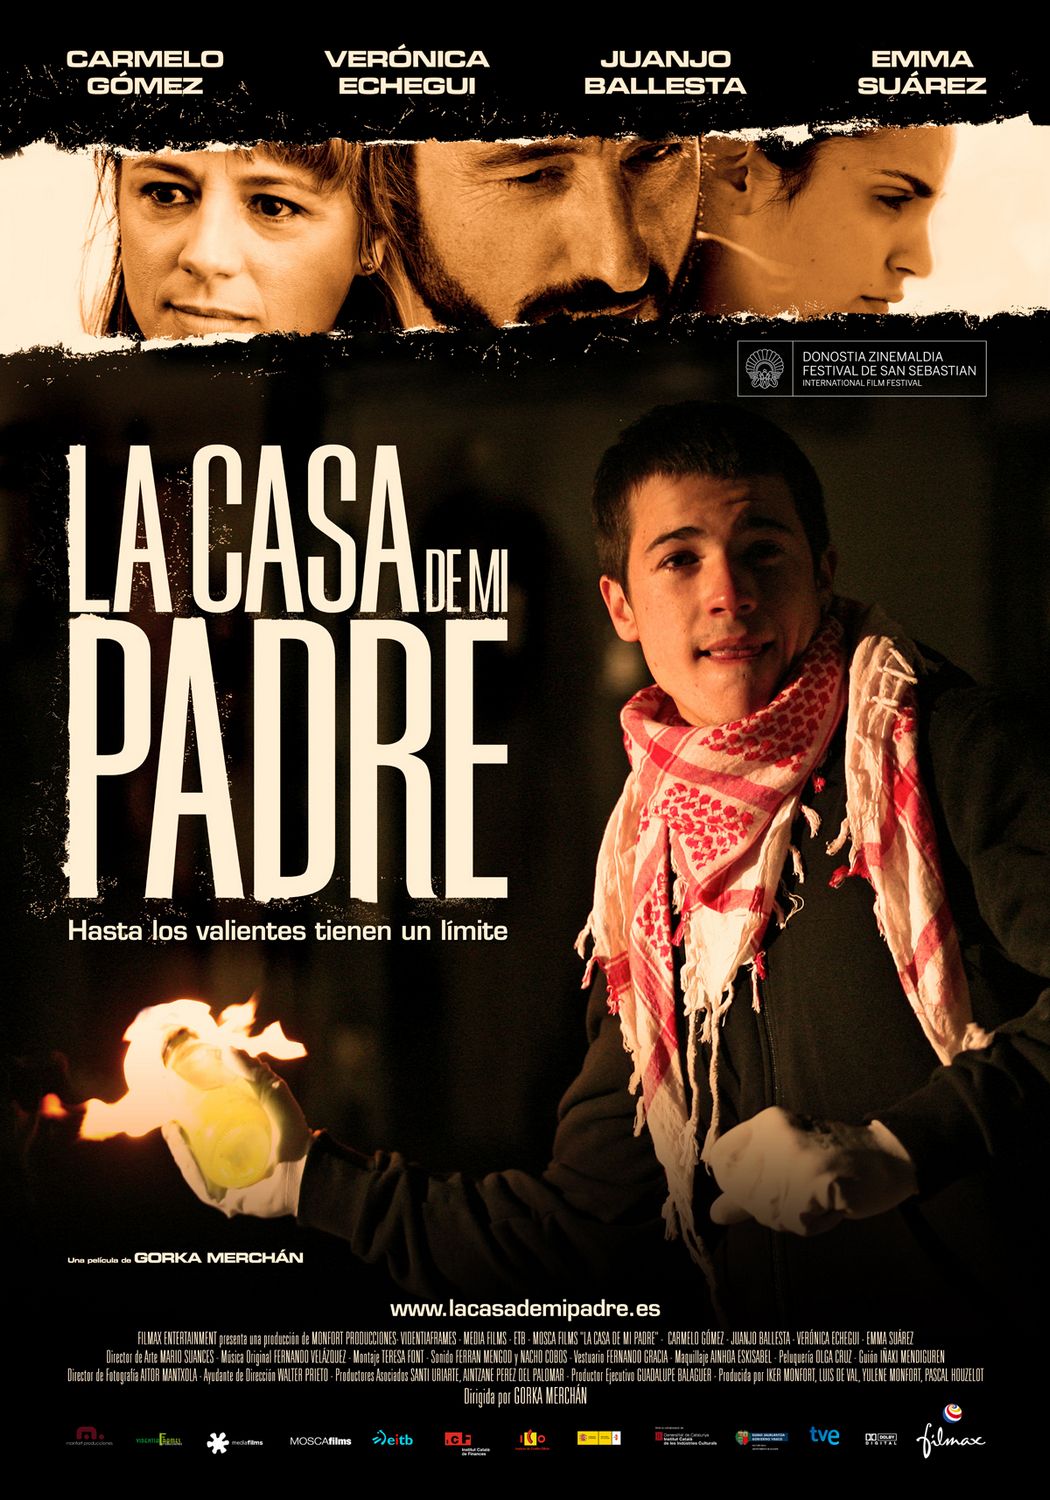 Extra Large Movie Poster Image for Casa de mi padre, La 